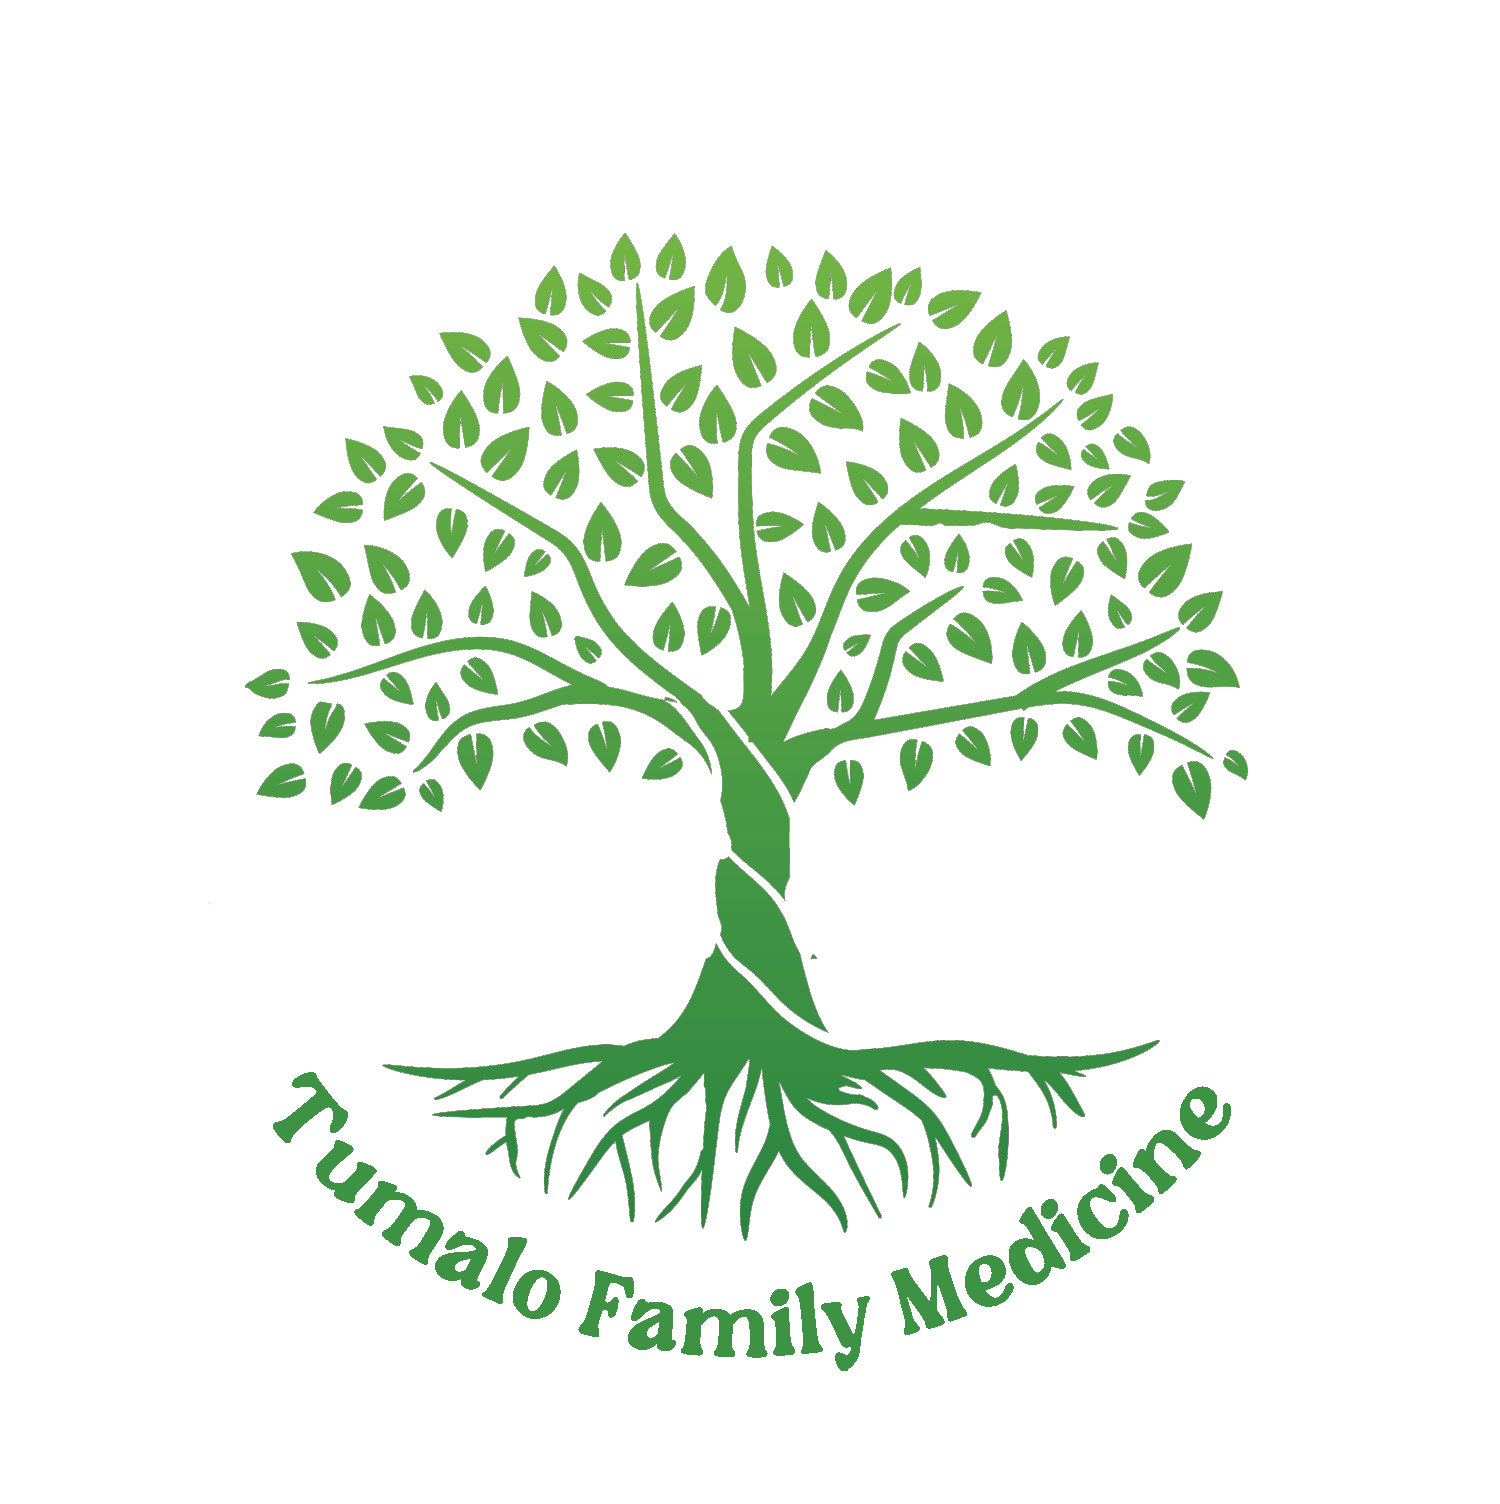 Tumalo Family Medicine